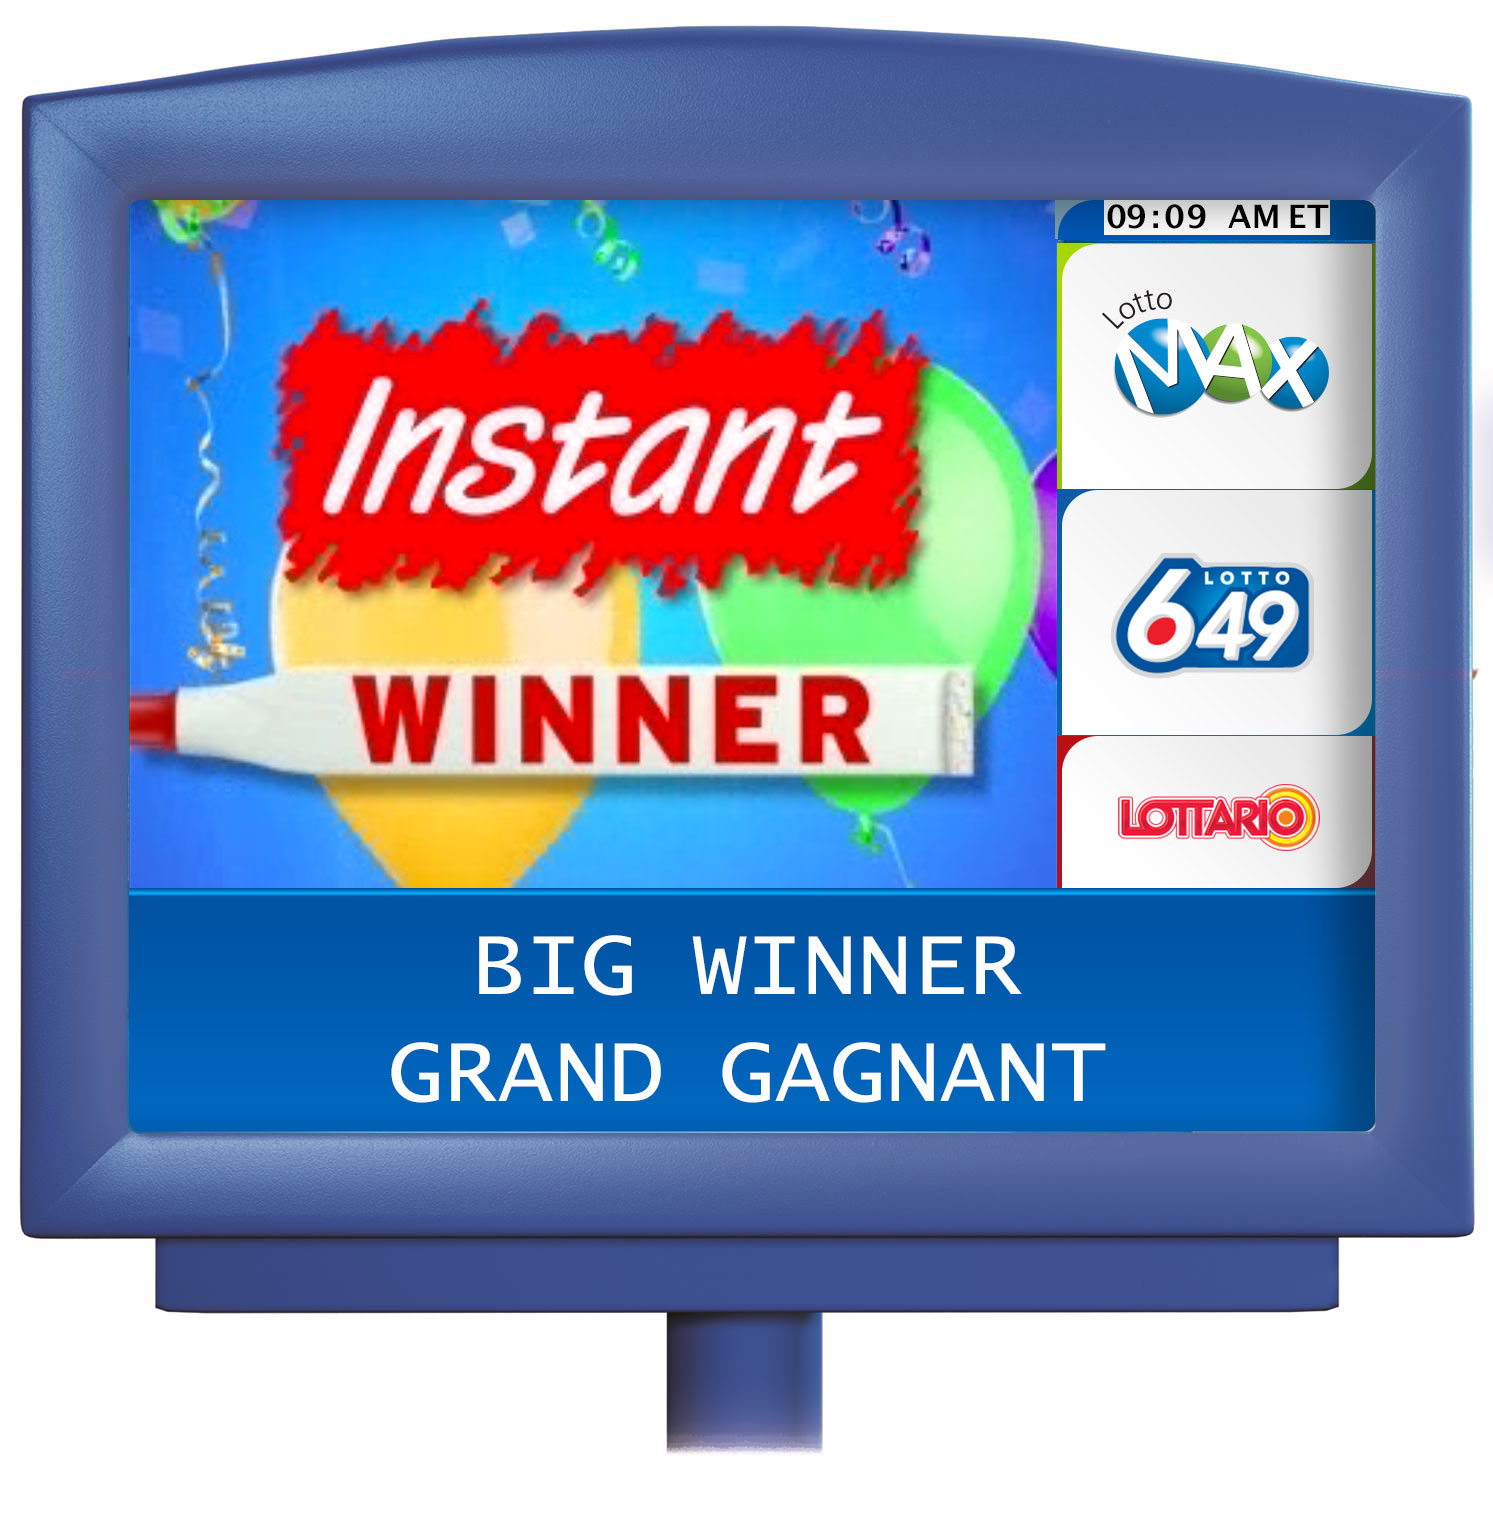 Customer display screen showing “Instant WINNER”